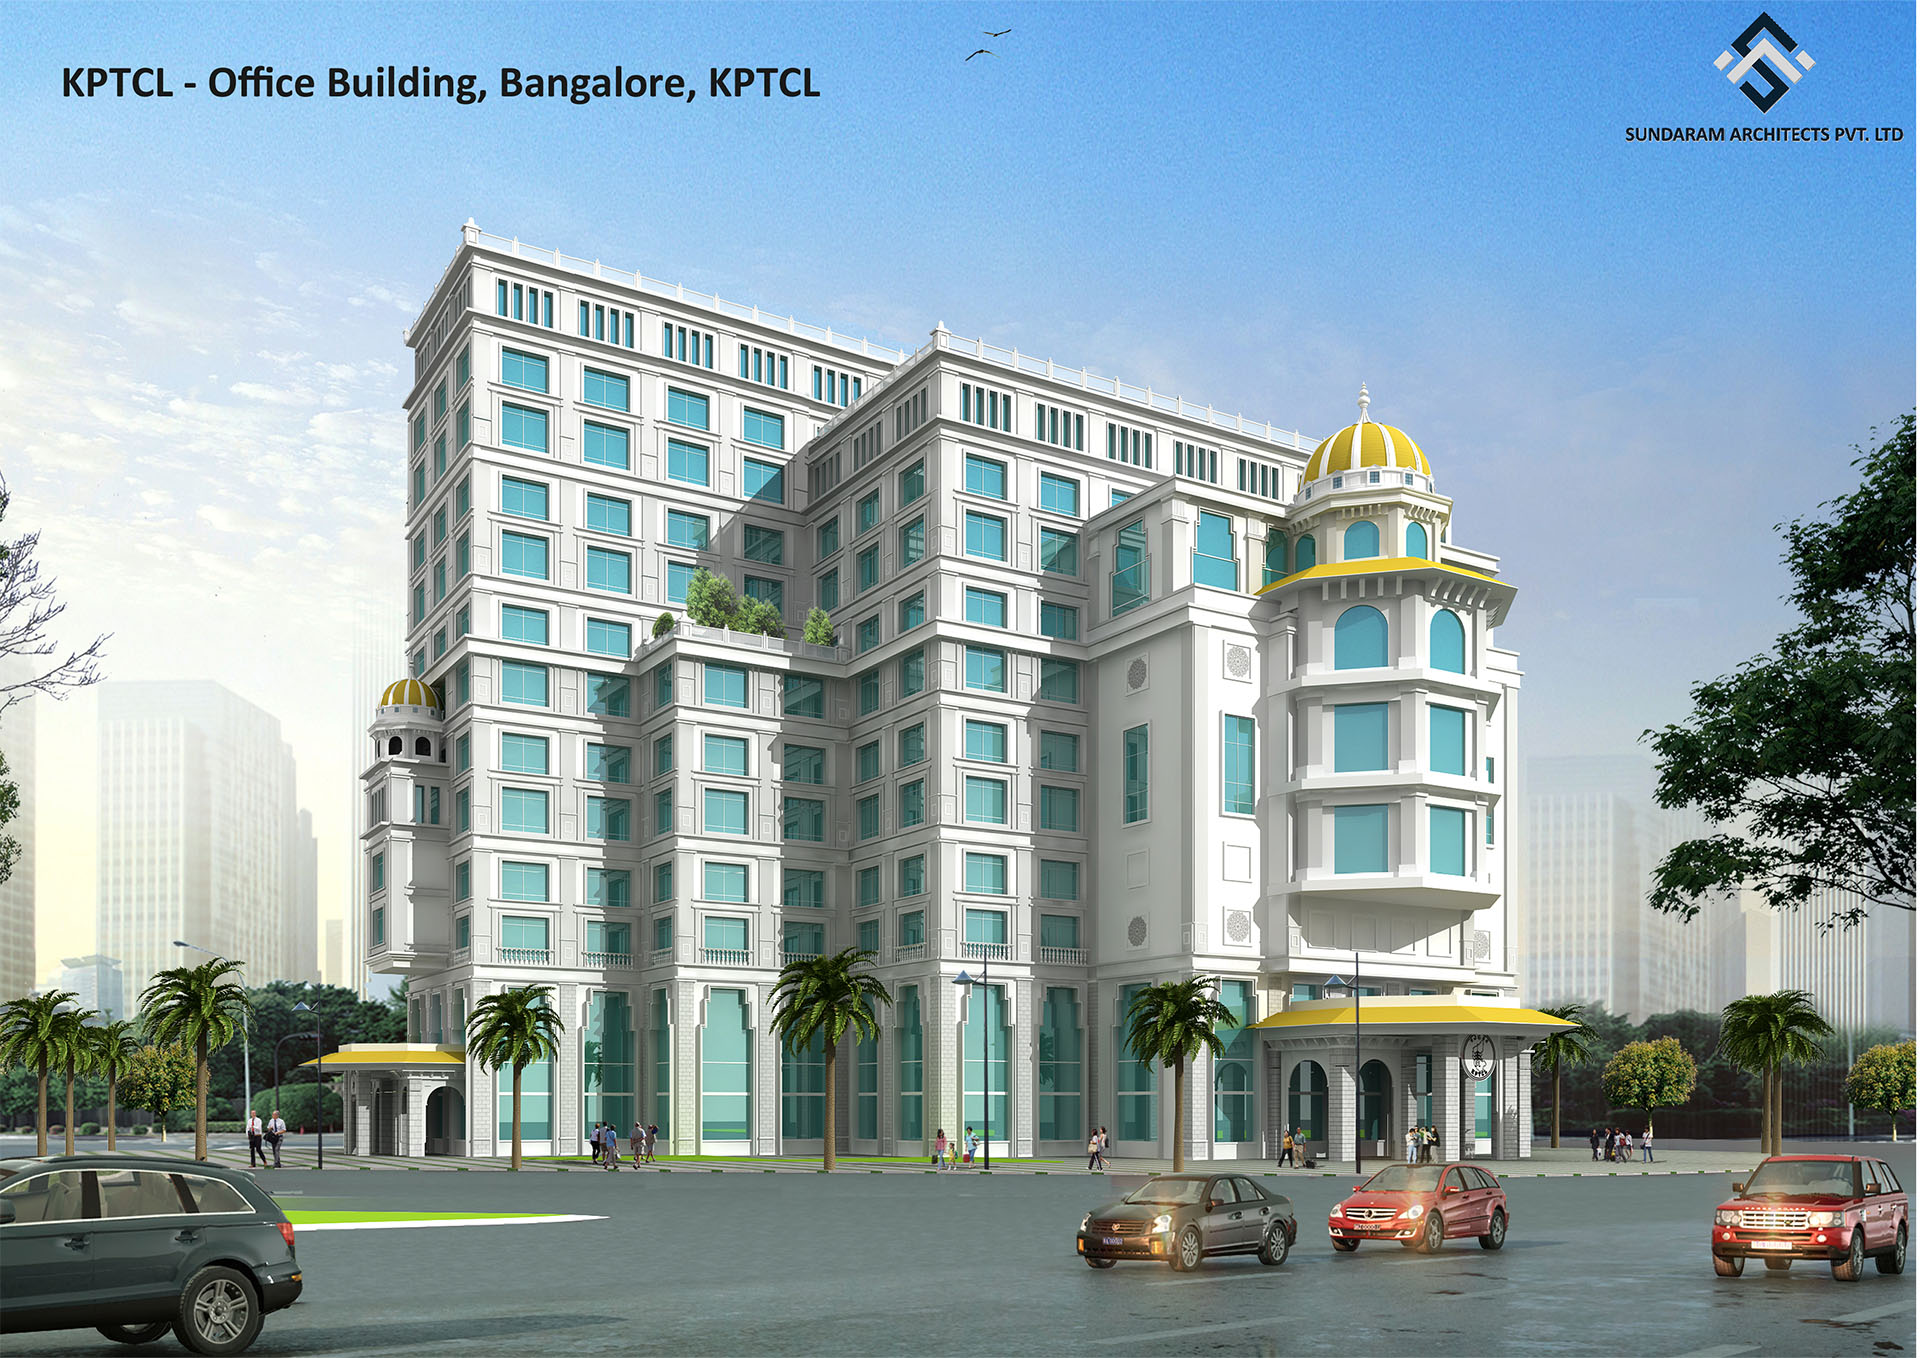 KPTCL - Office Building, Bangalore, KPTCL - Civic & Government Design